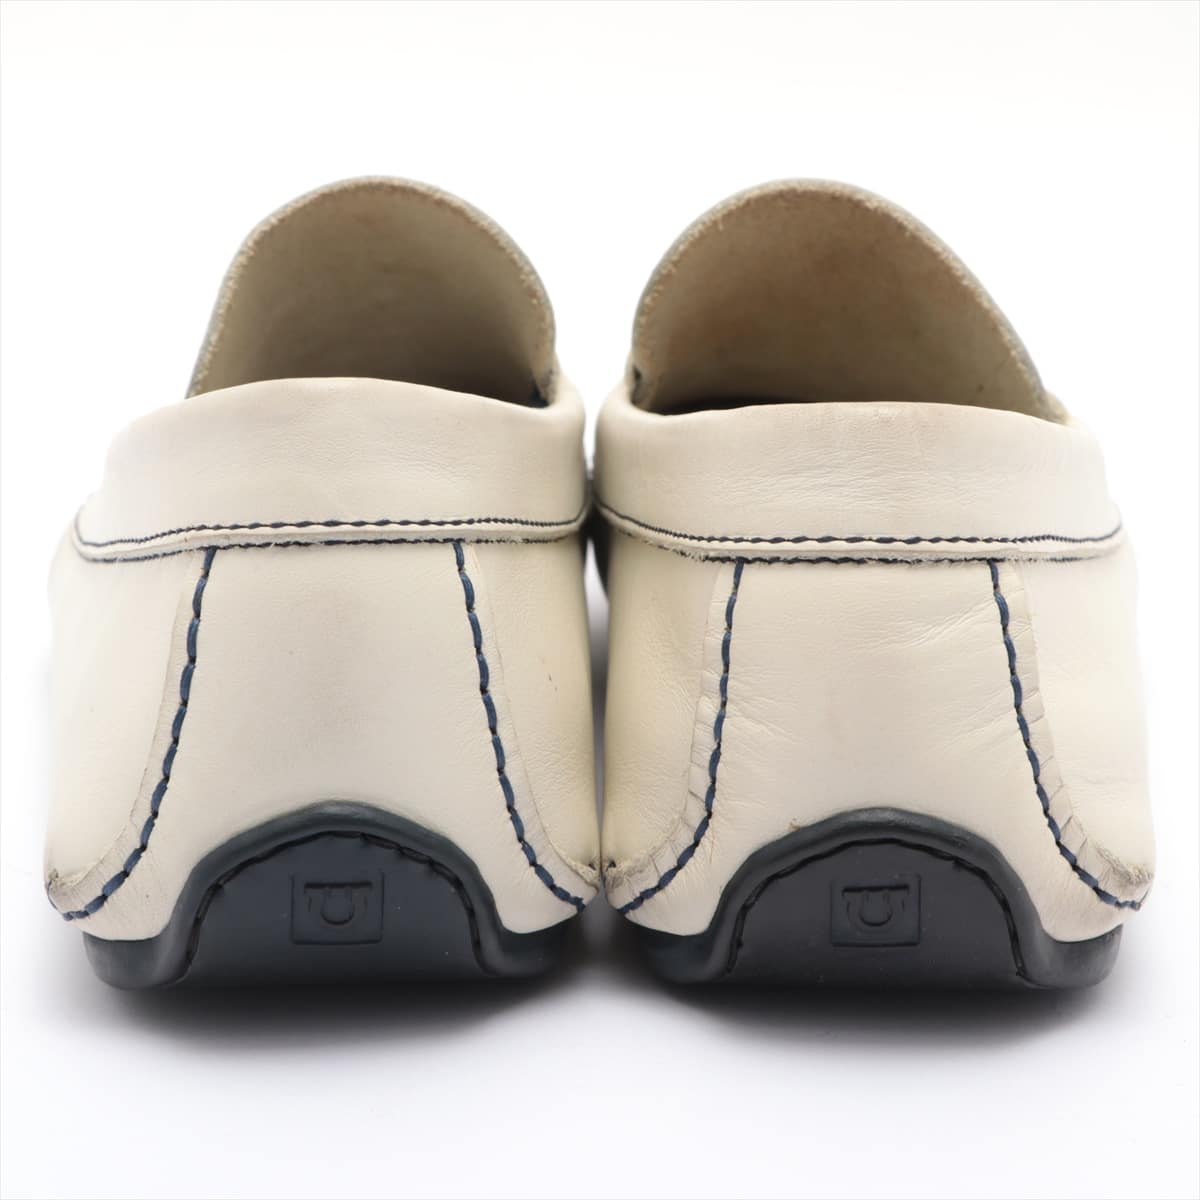 Ferragamo Leather Driving shoes 7 1/2 Men's White